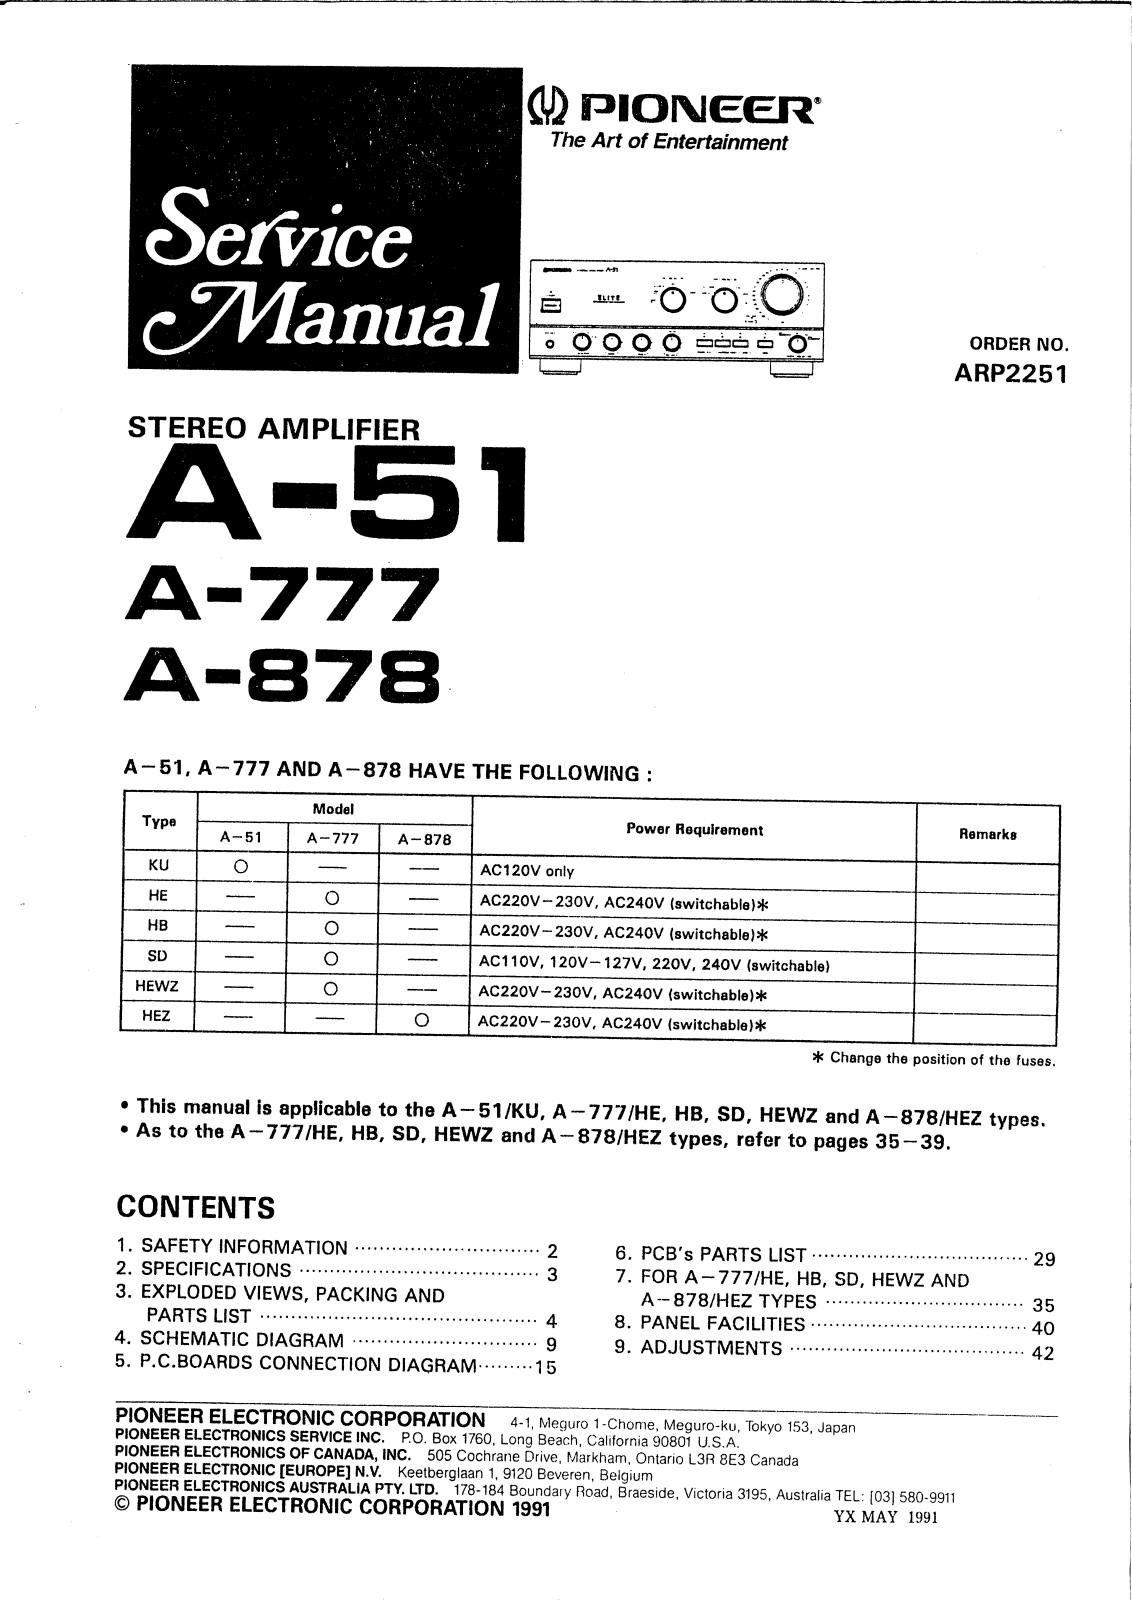 Pioneer A-51, A-777, A-878 Service manual